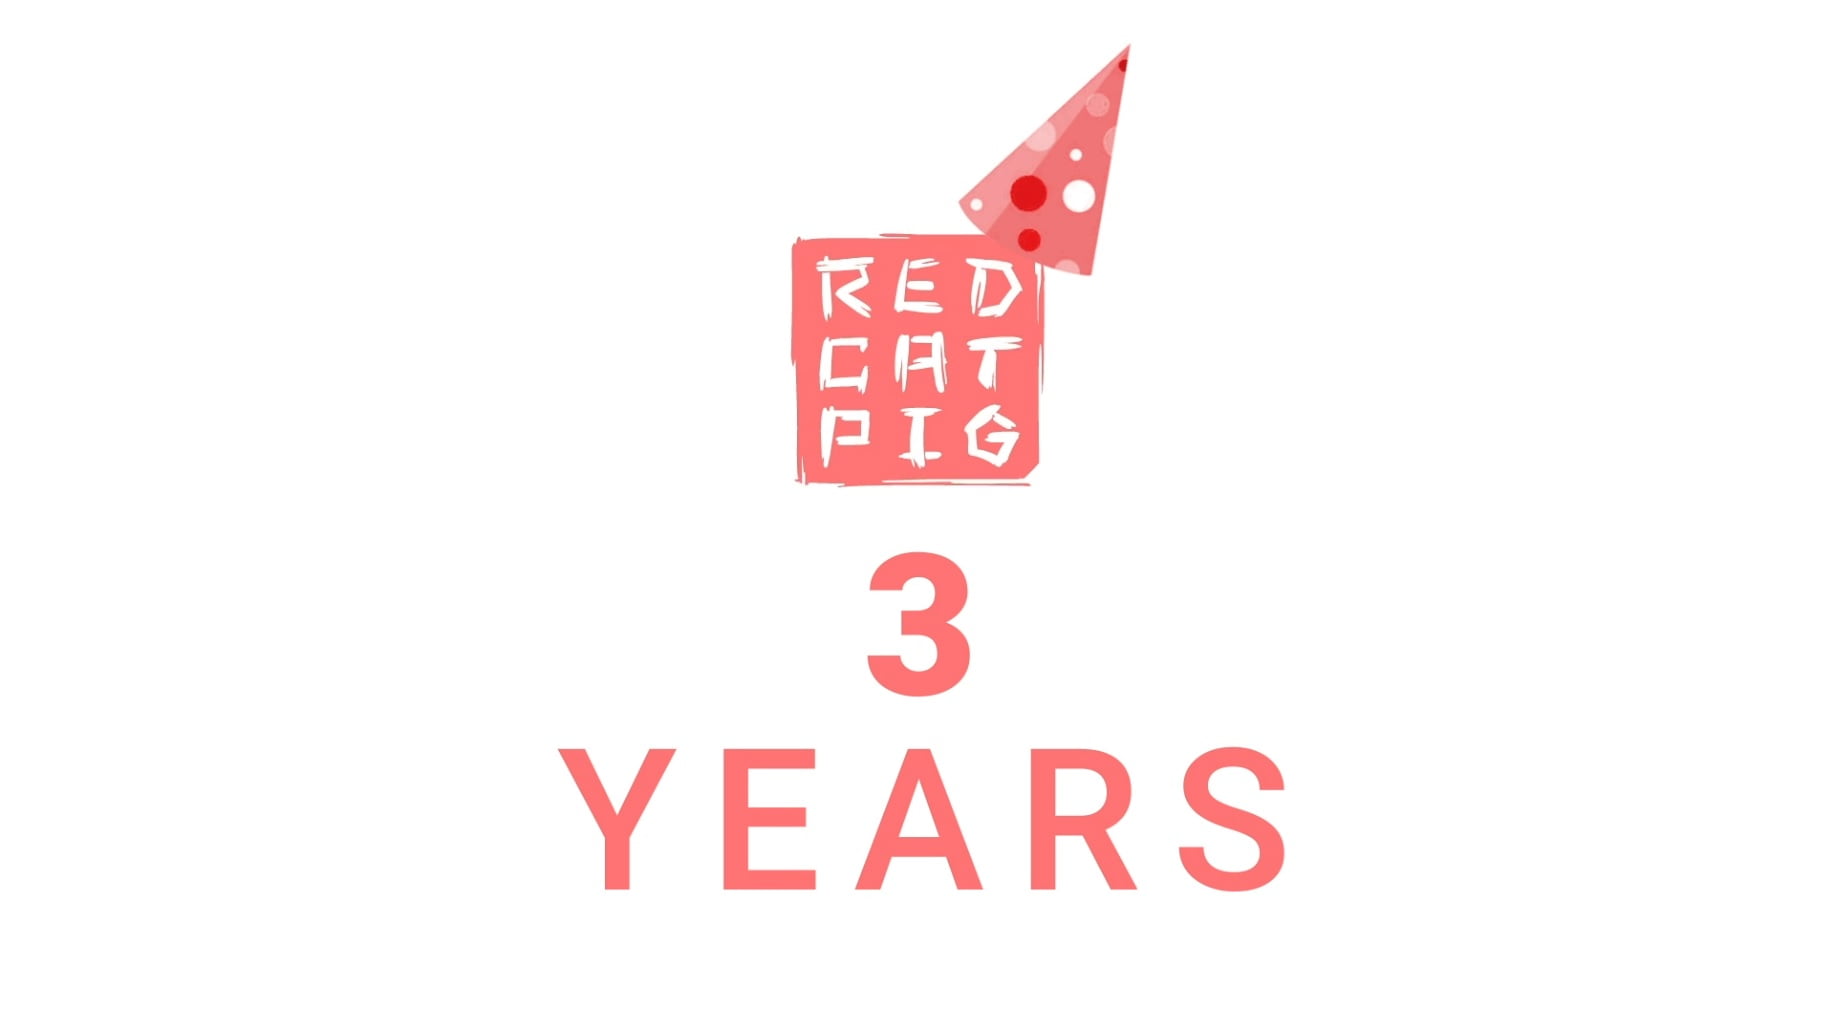 Redcatpig 3 years milestone